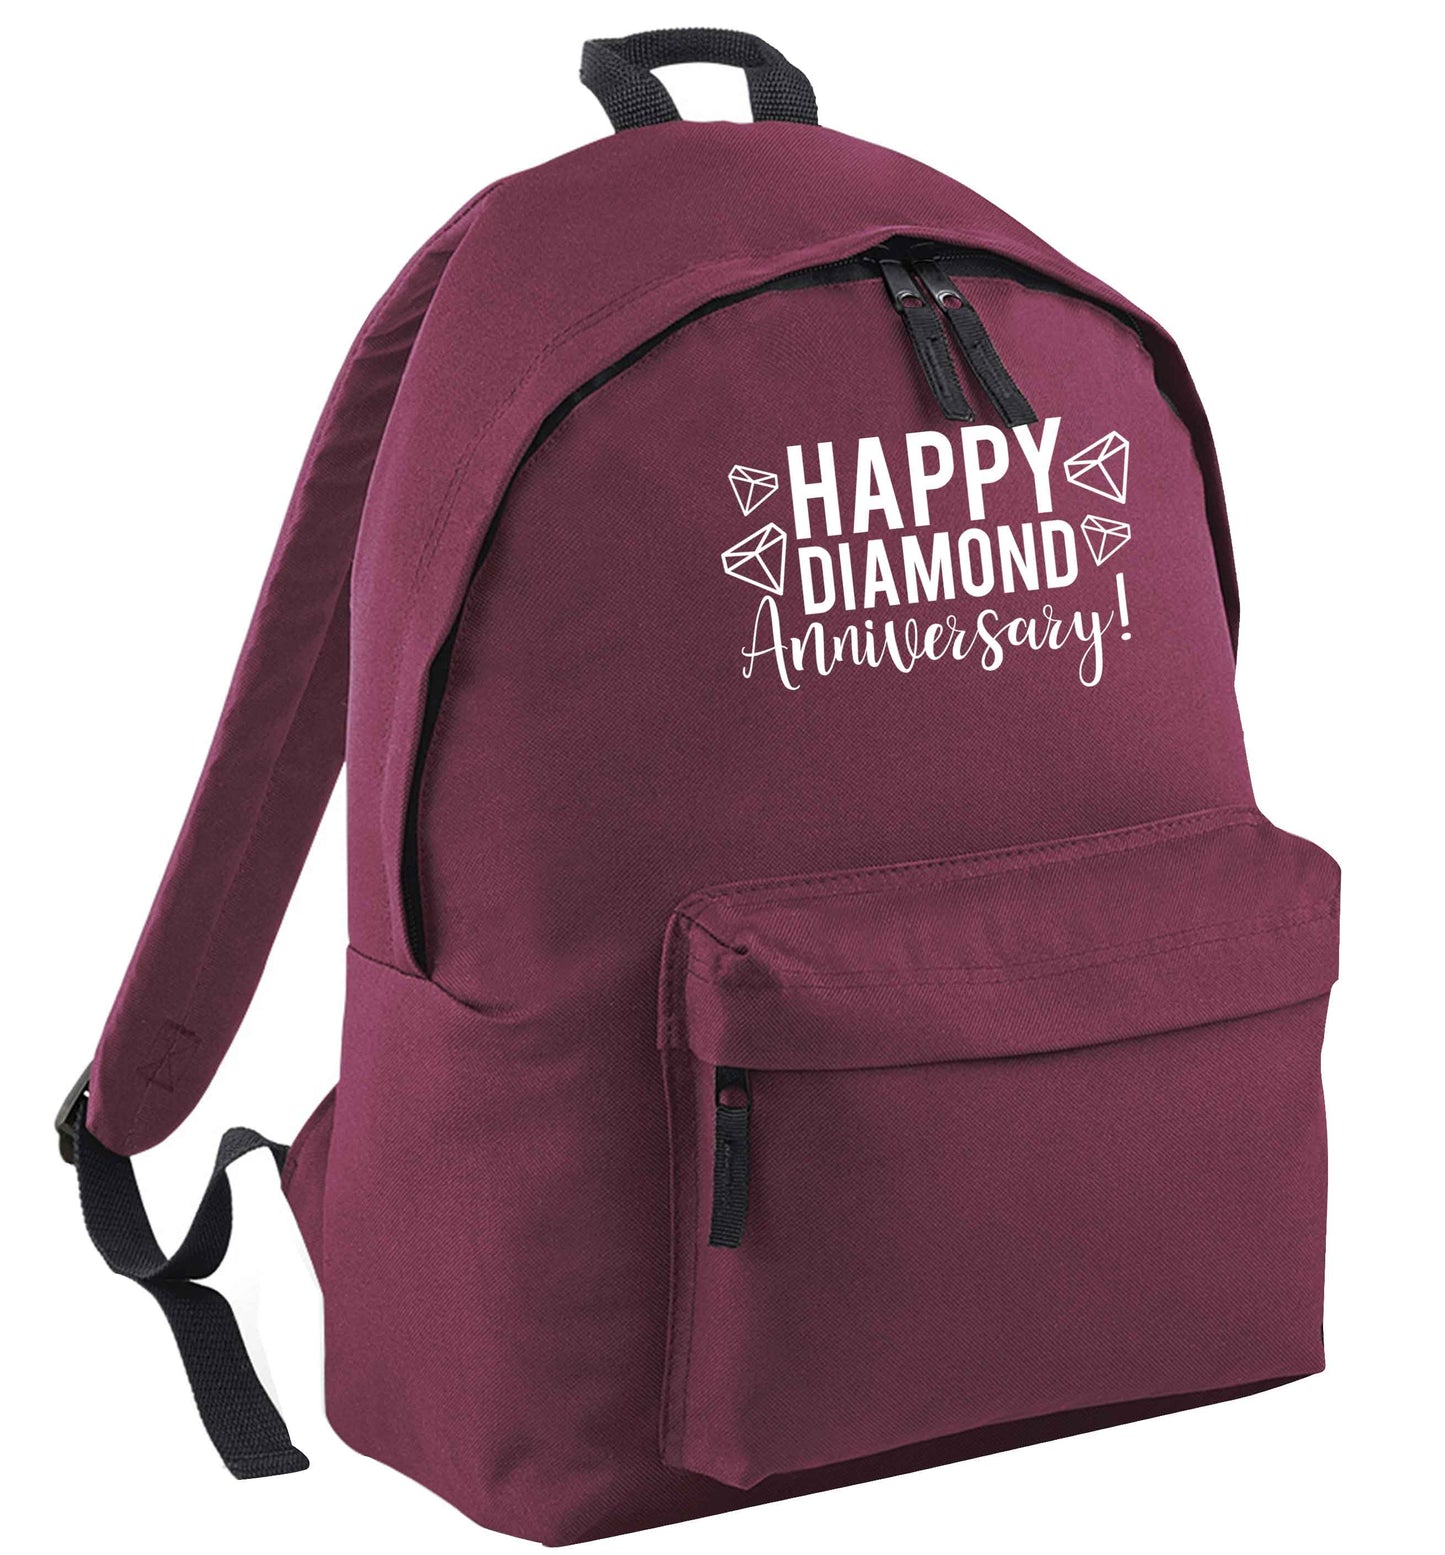 Happy diamond anniversary! black adults backpack